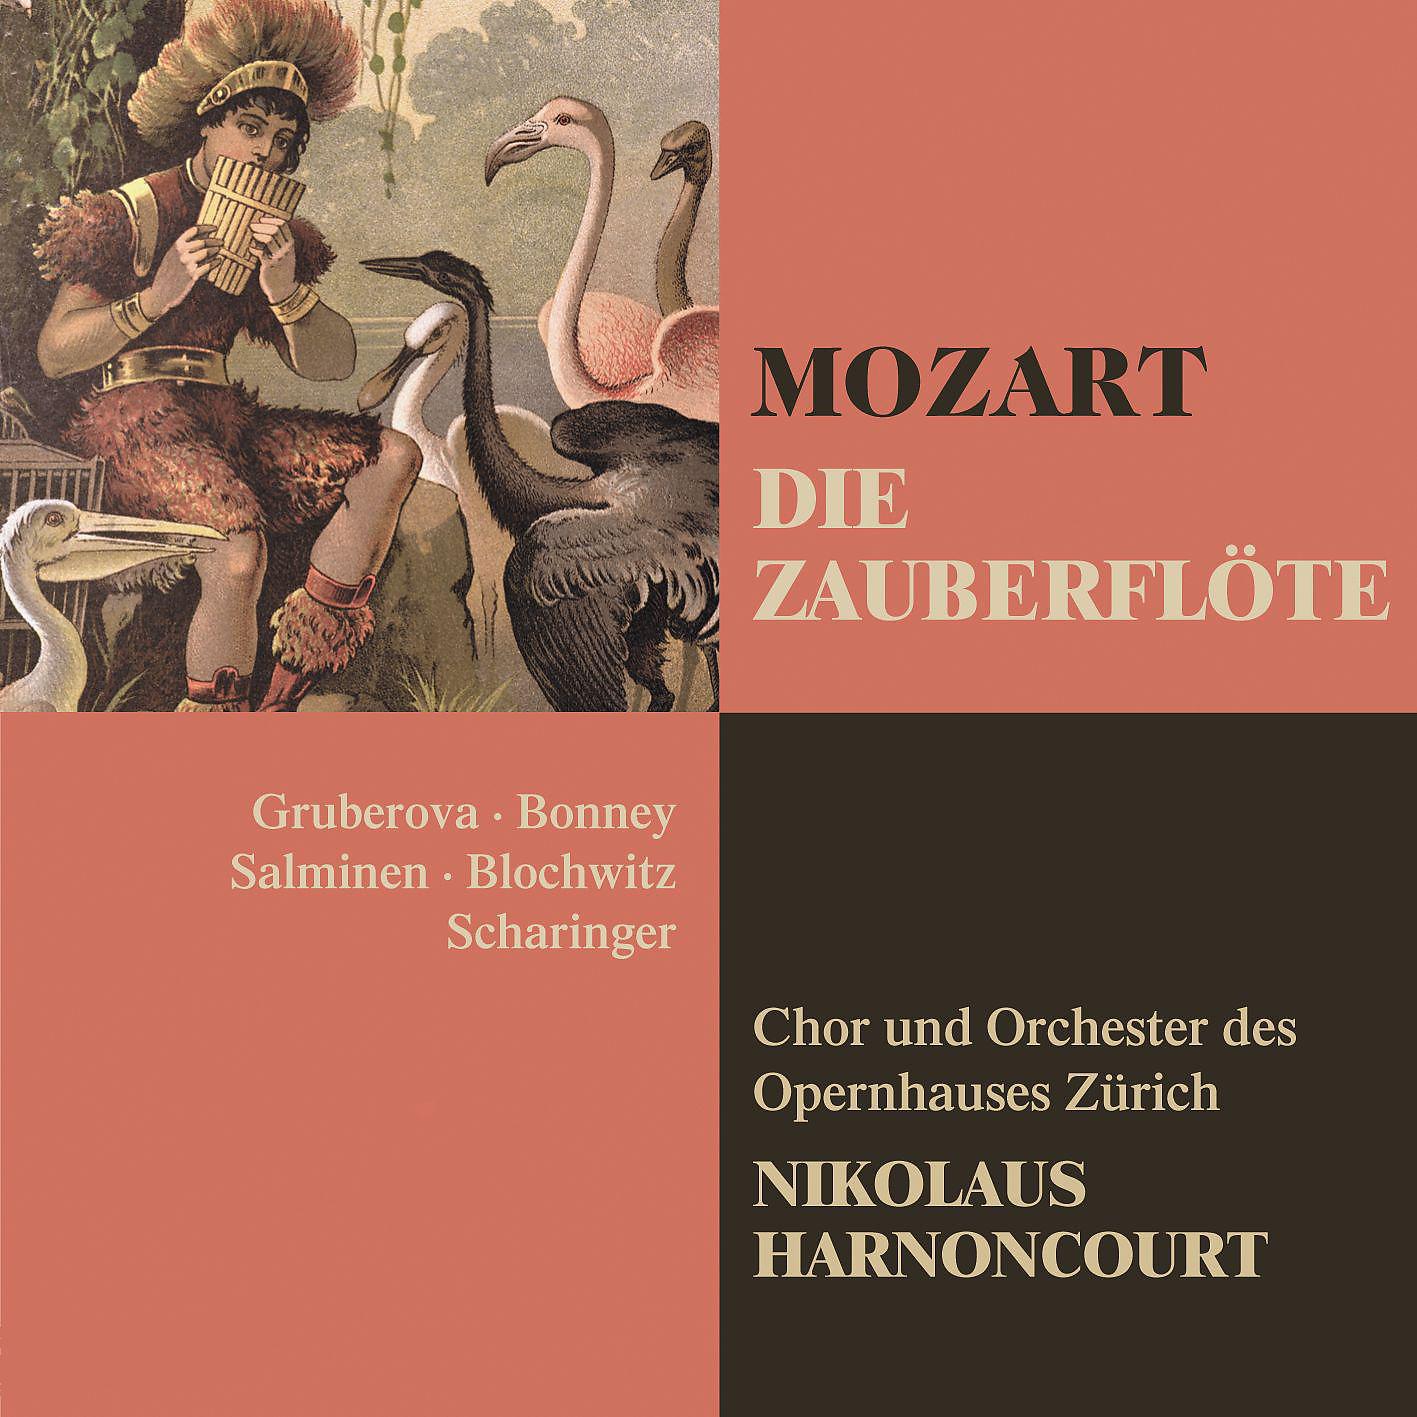 Nikolaus Harnoncourt - Die Zauberflöte : Act 1 